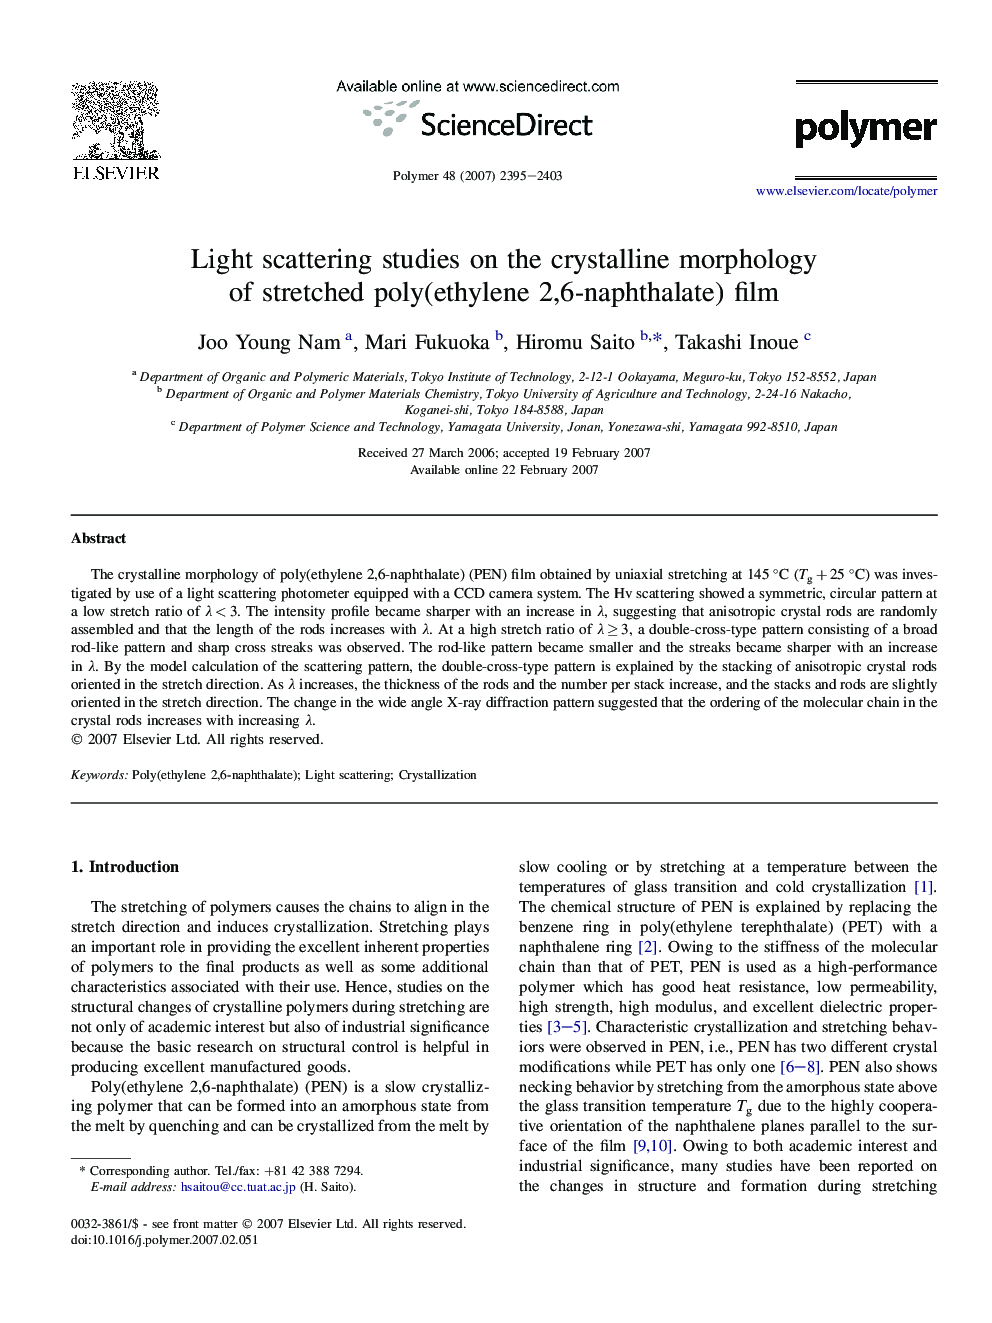 Light scattering studies on the crystalline morphology of stretched poly(ethylene 2,6-naphthalate) film